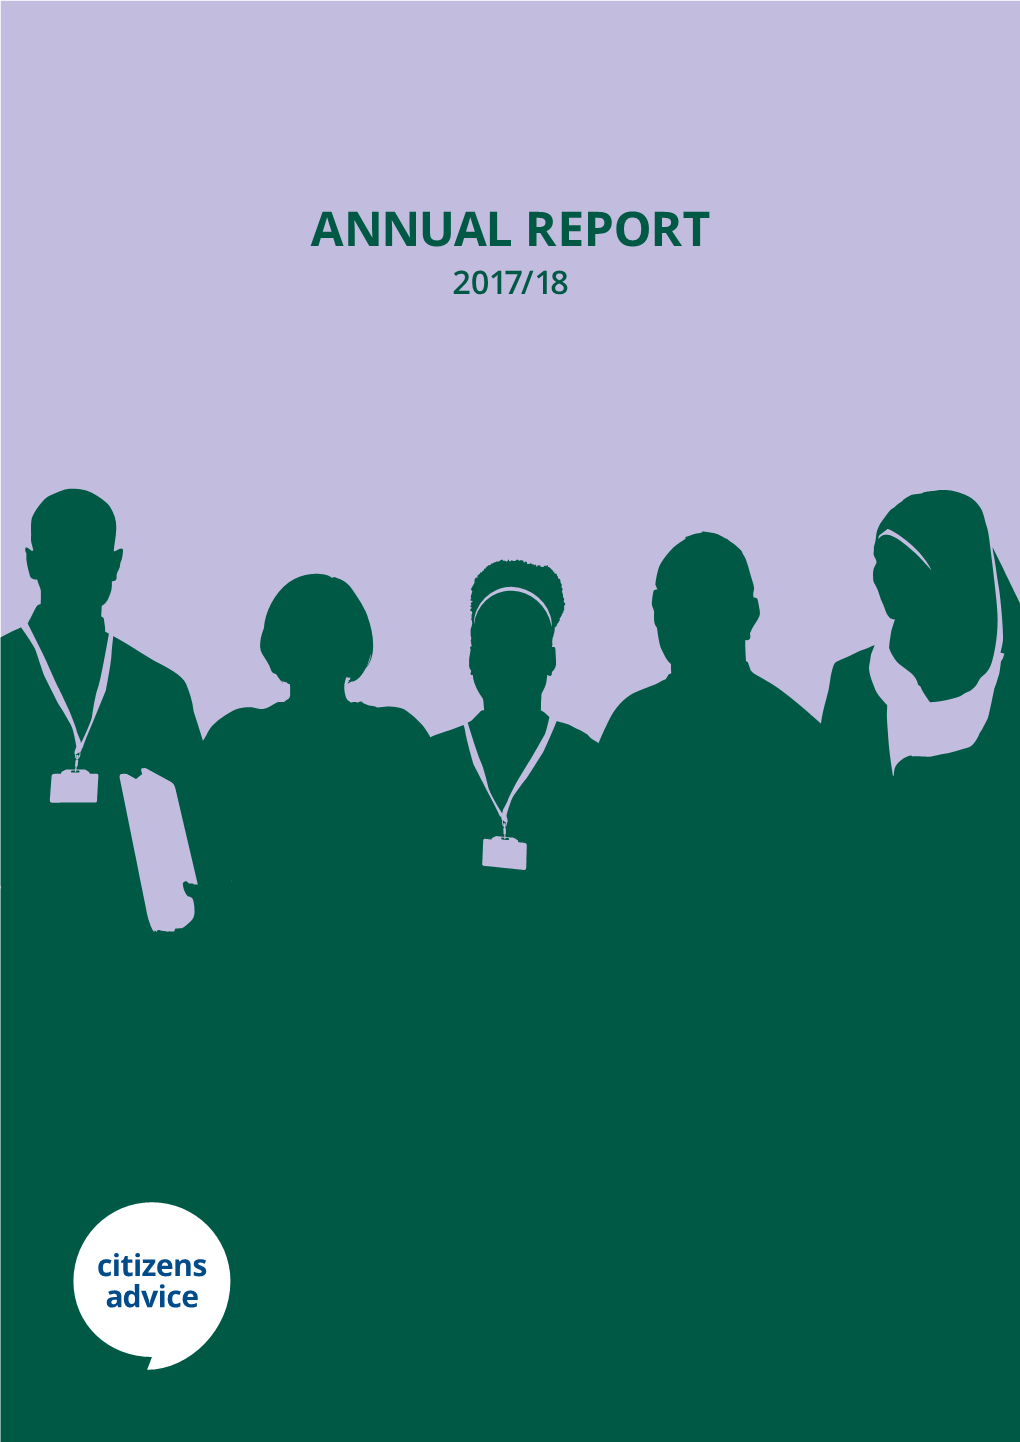 Citizens Advice Annual Report 2017/18